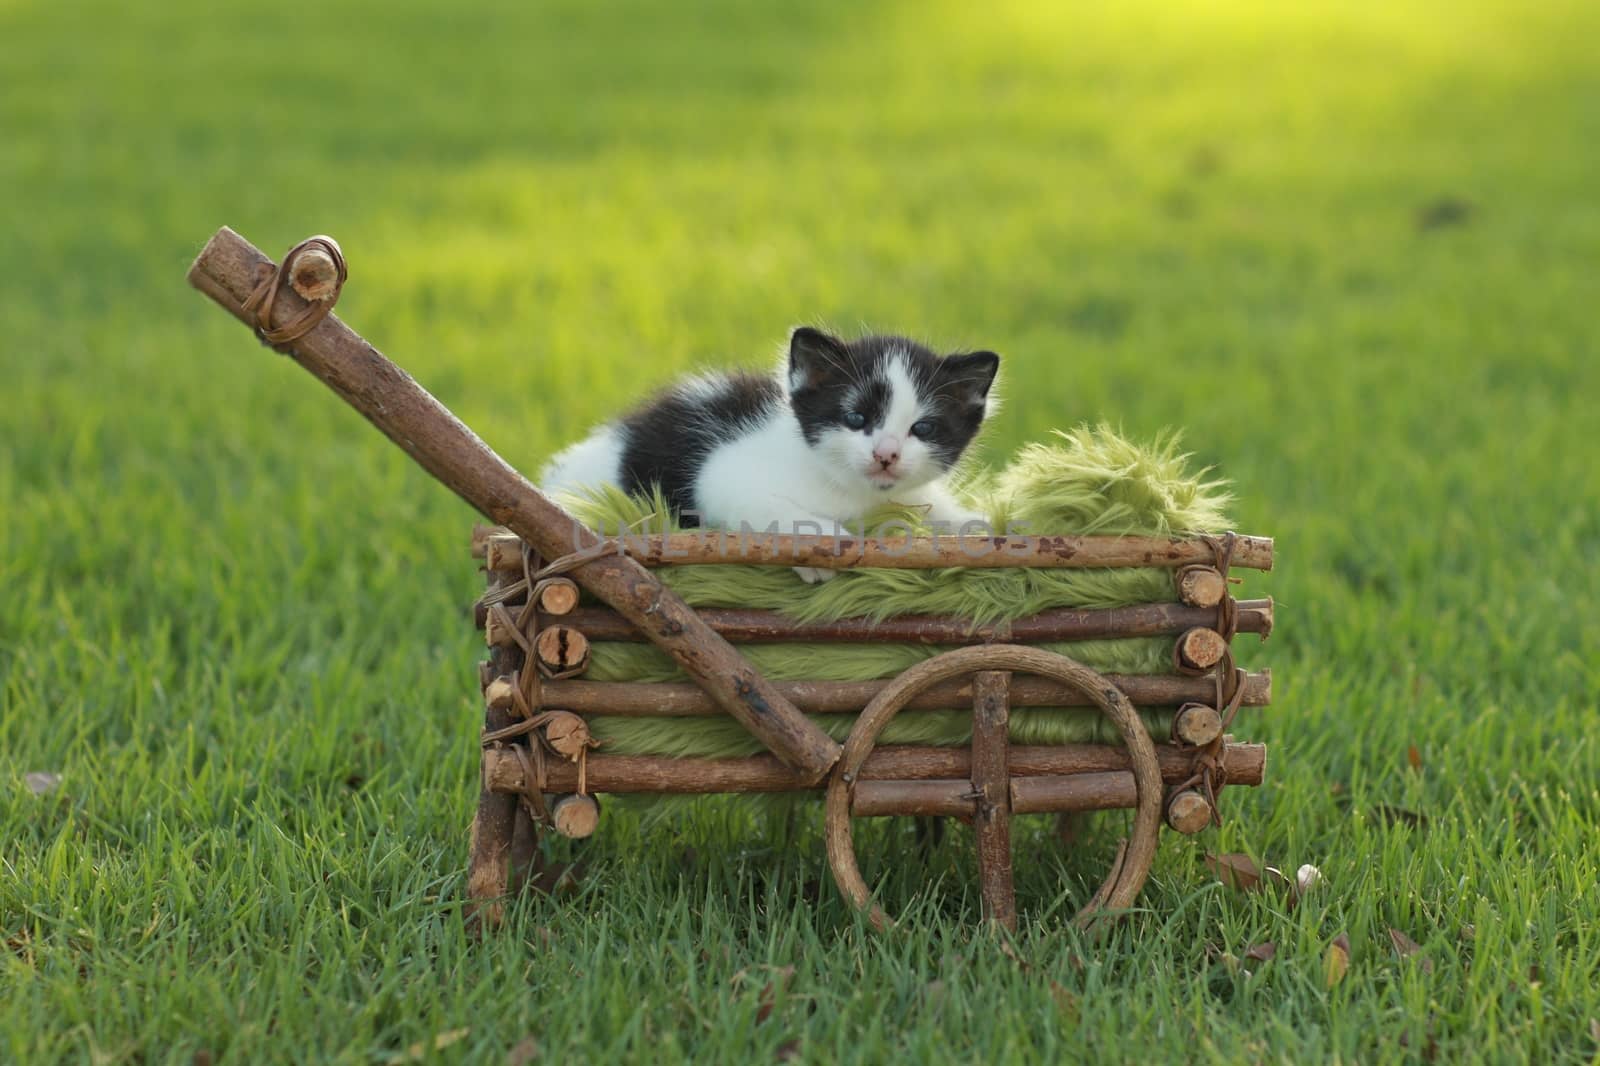 Baby Kitten Outdoors in Grass by tobkatrina